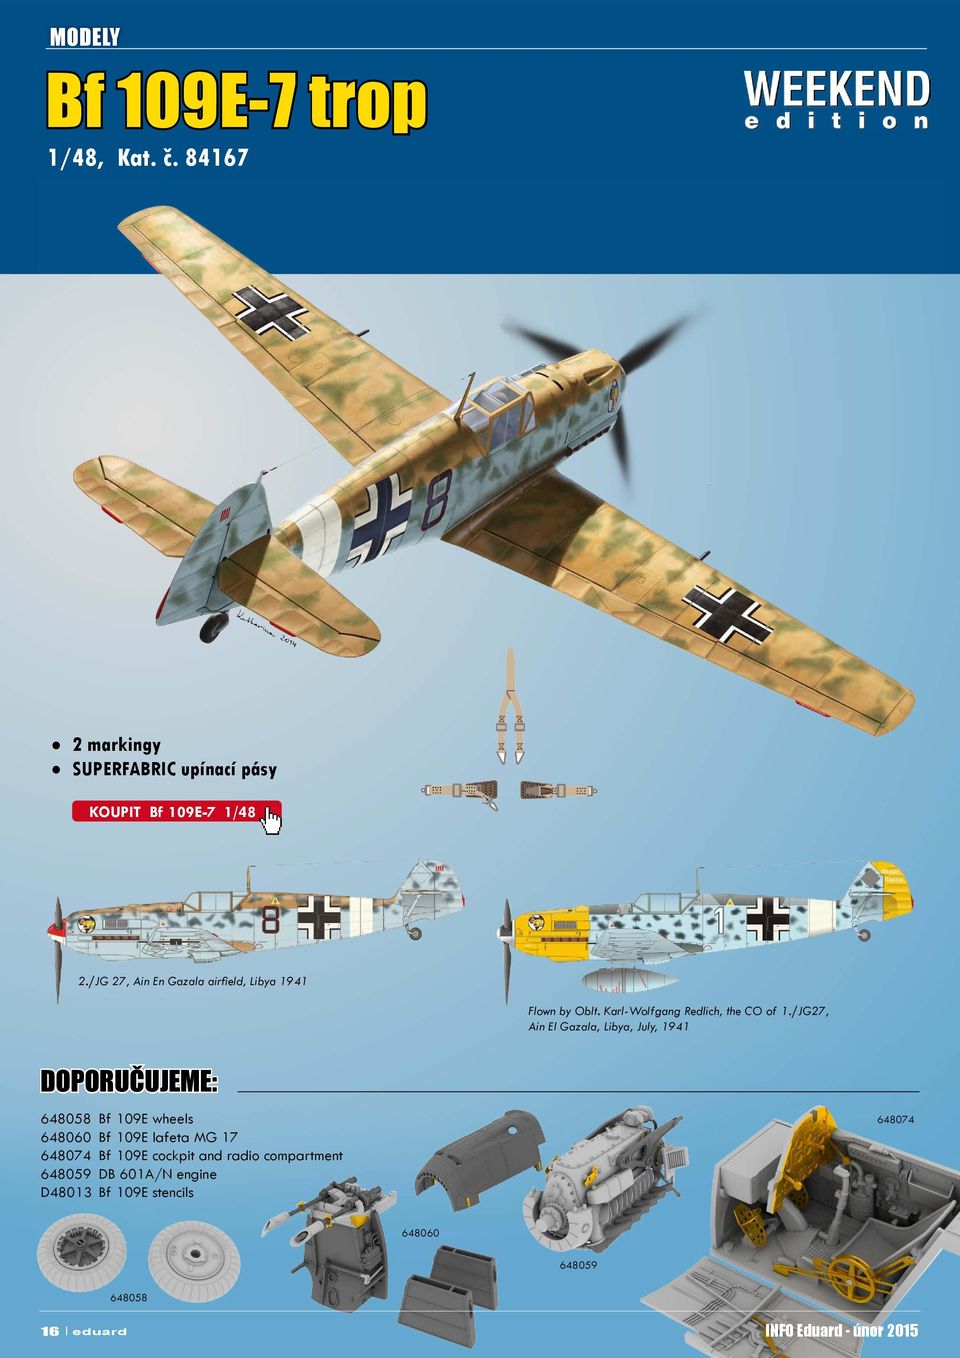 /JG27, Ain El Gazala, Libya, July, 1941 DOPORUČUJEME: 648058 Bf 109E wheels 648060 Bf 109E lafeta MG 17